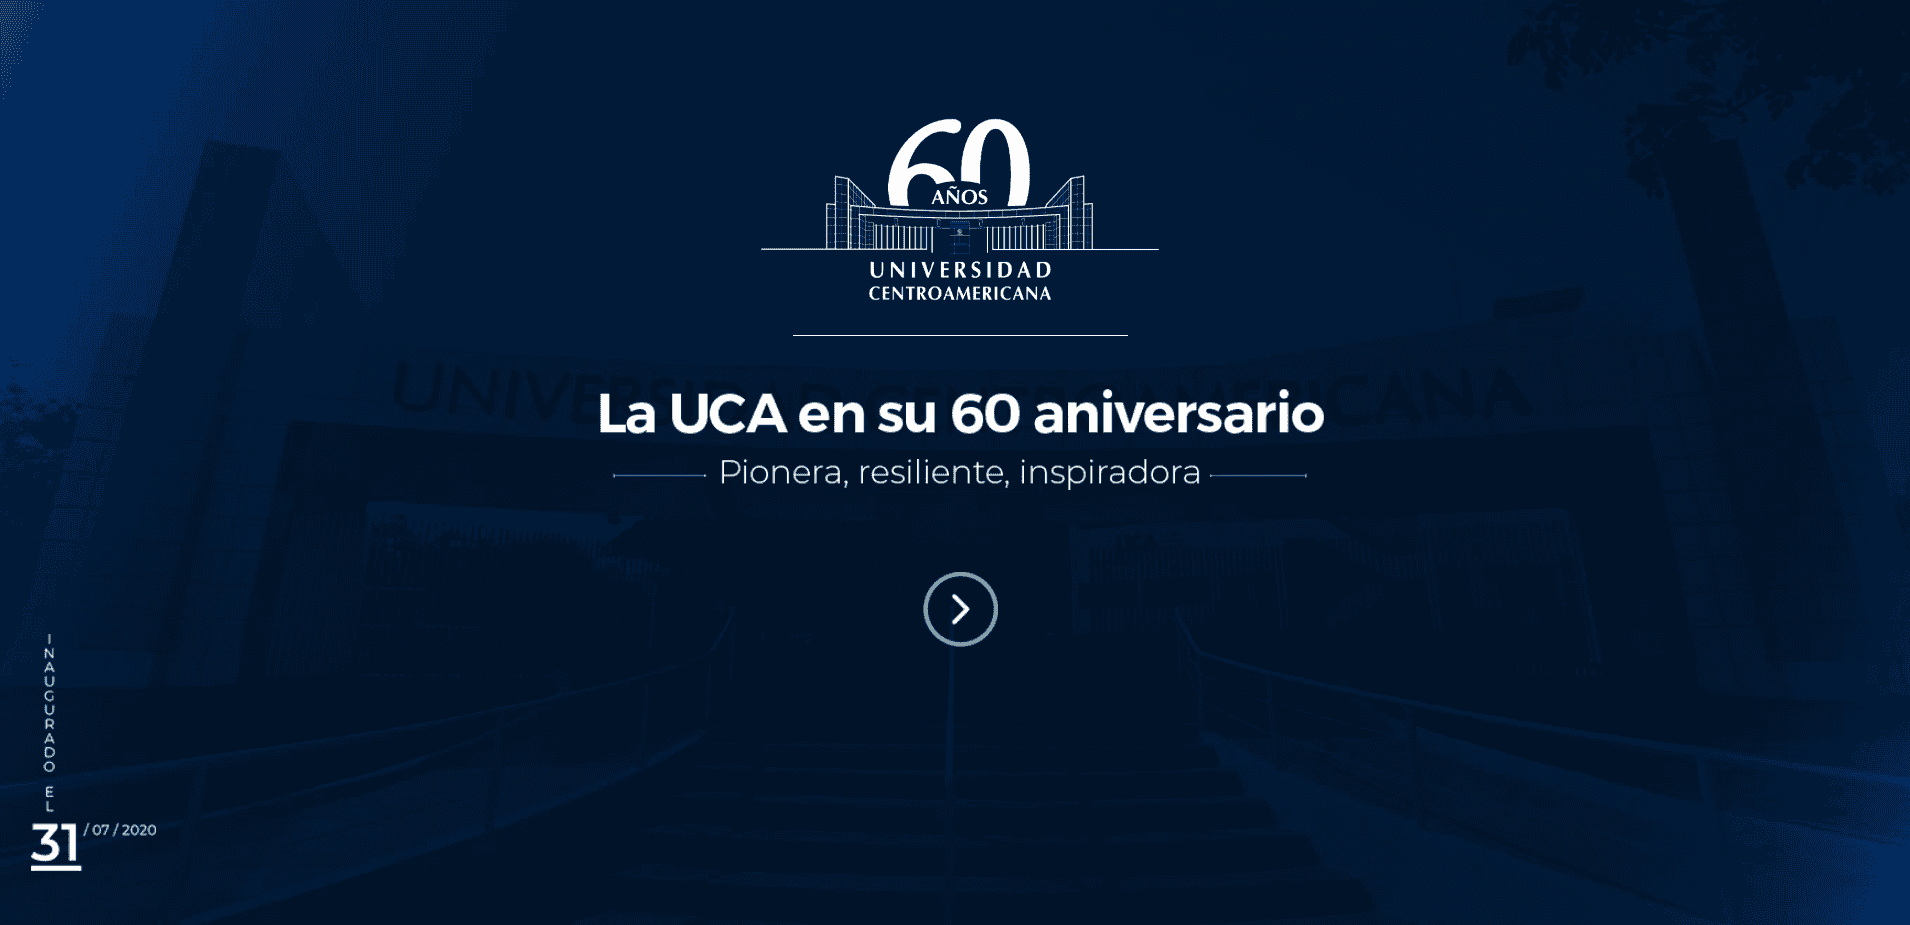 El 60 Aniversario de la UCA por: Carlos Tünnermann Bernheim